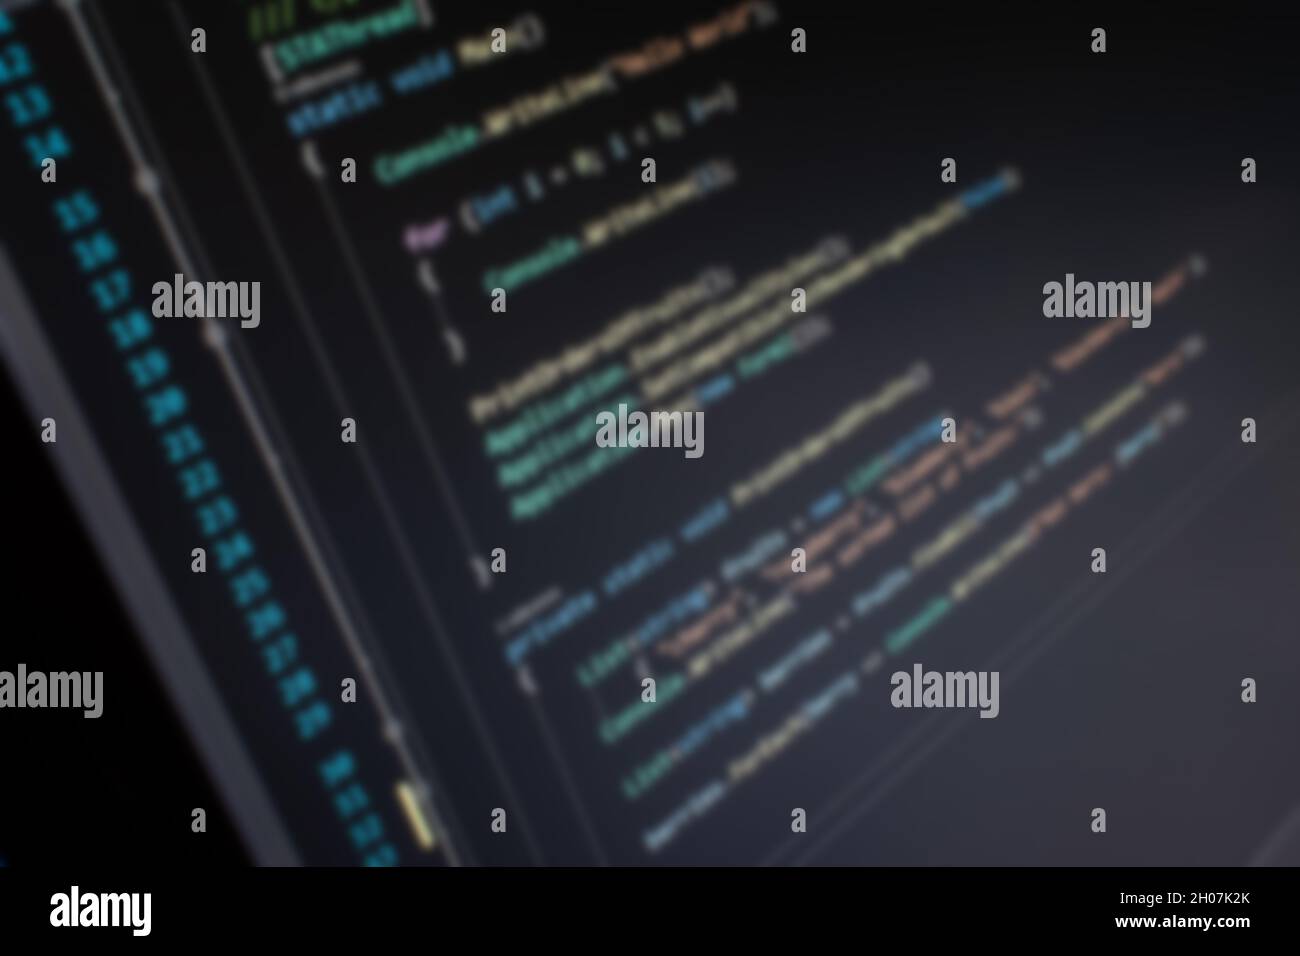 C# Hello World code on screen blurry background image Stock Photo